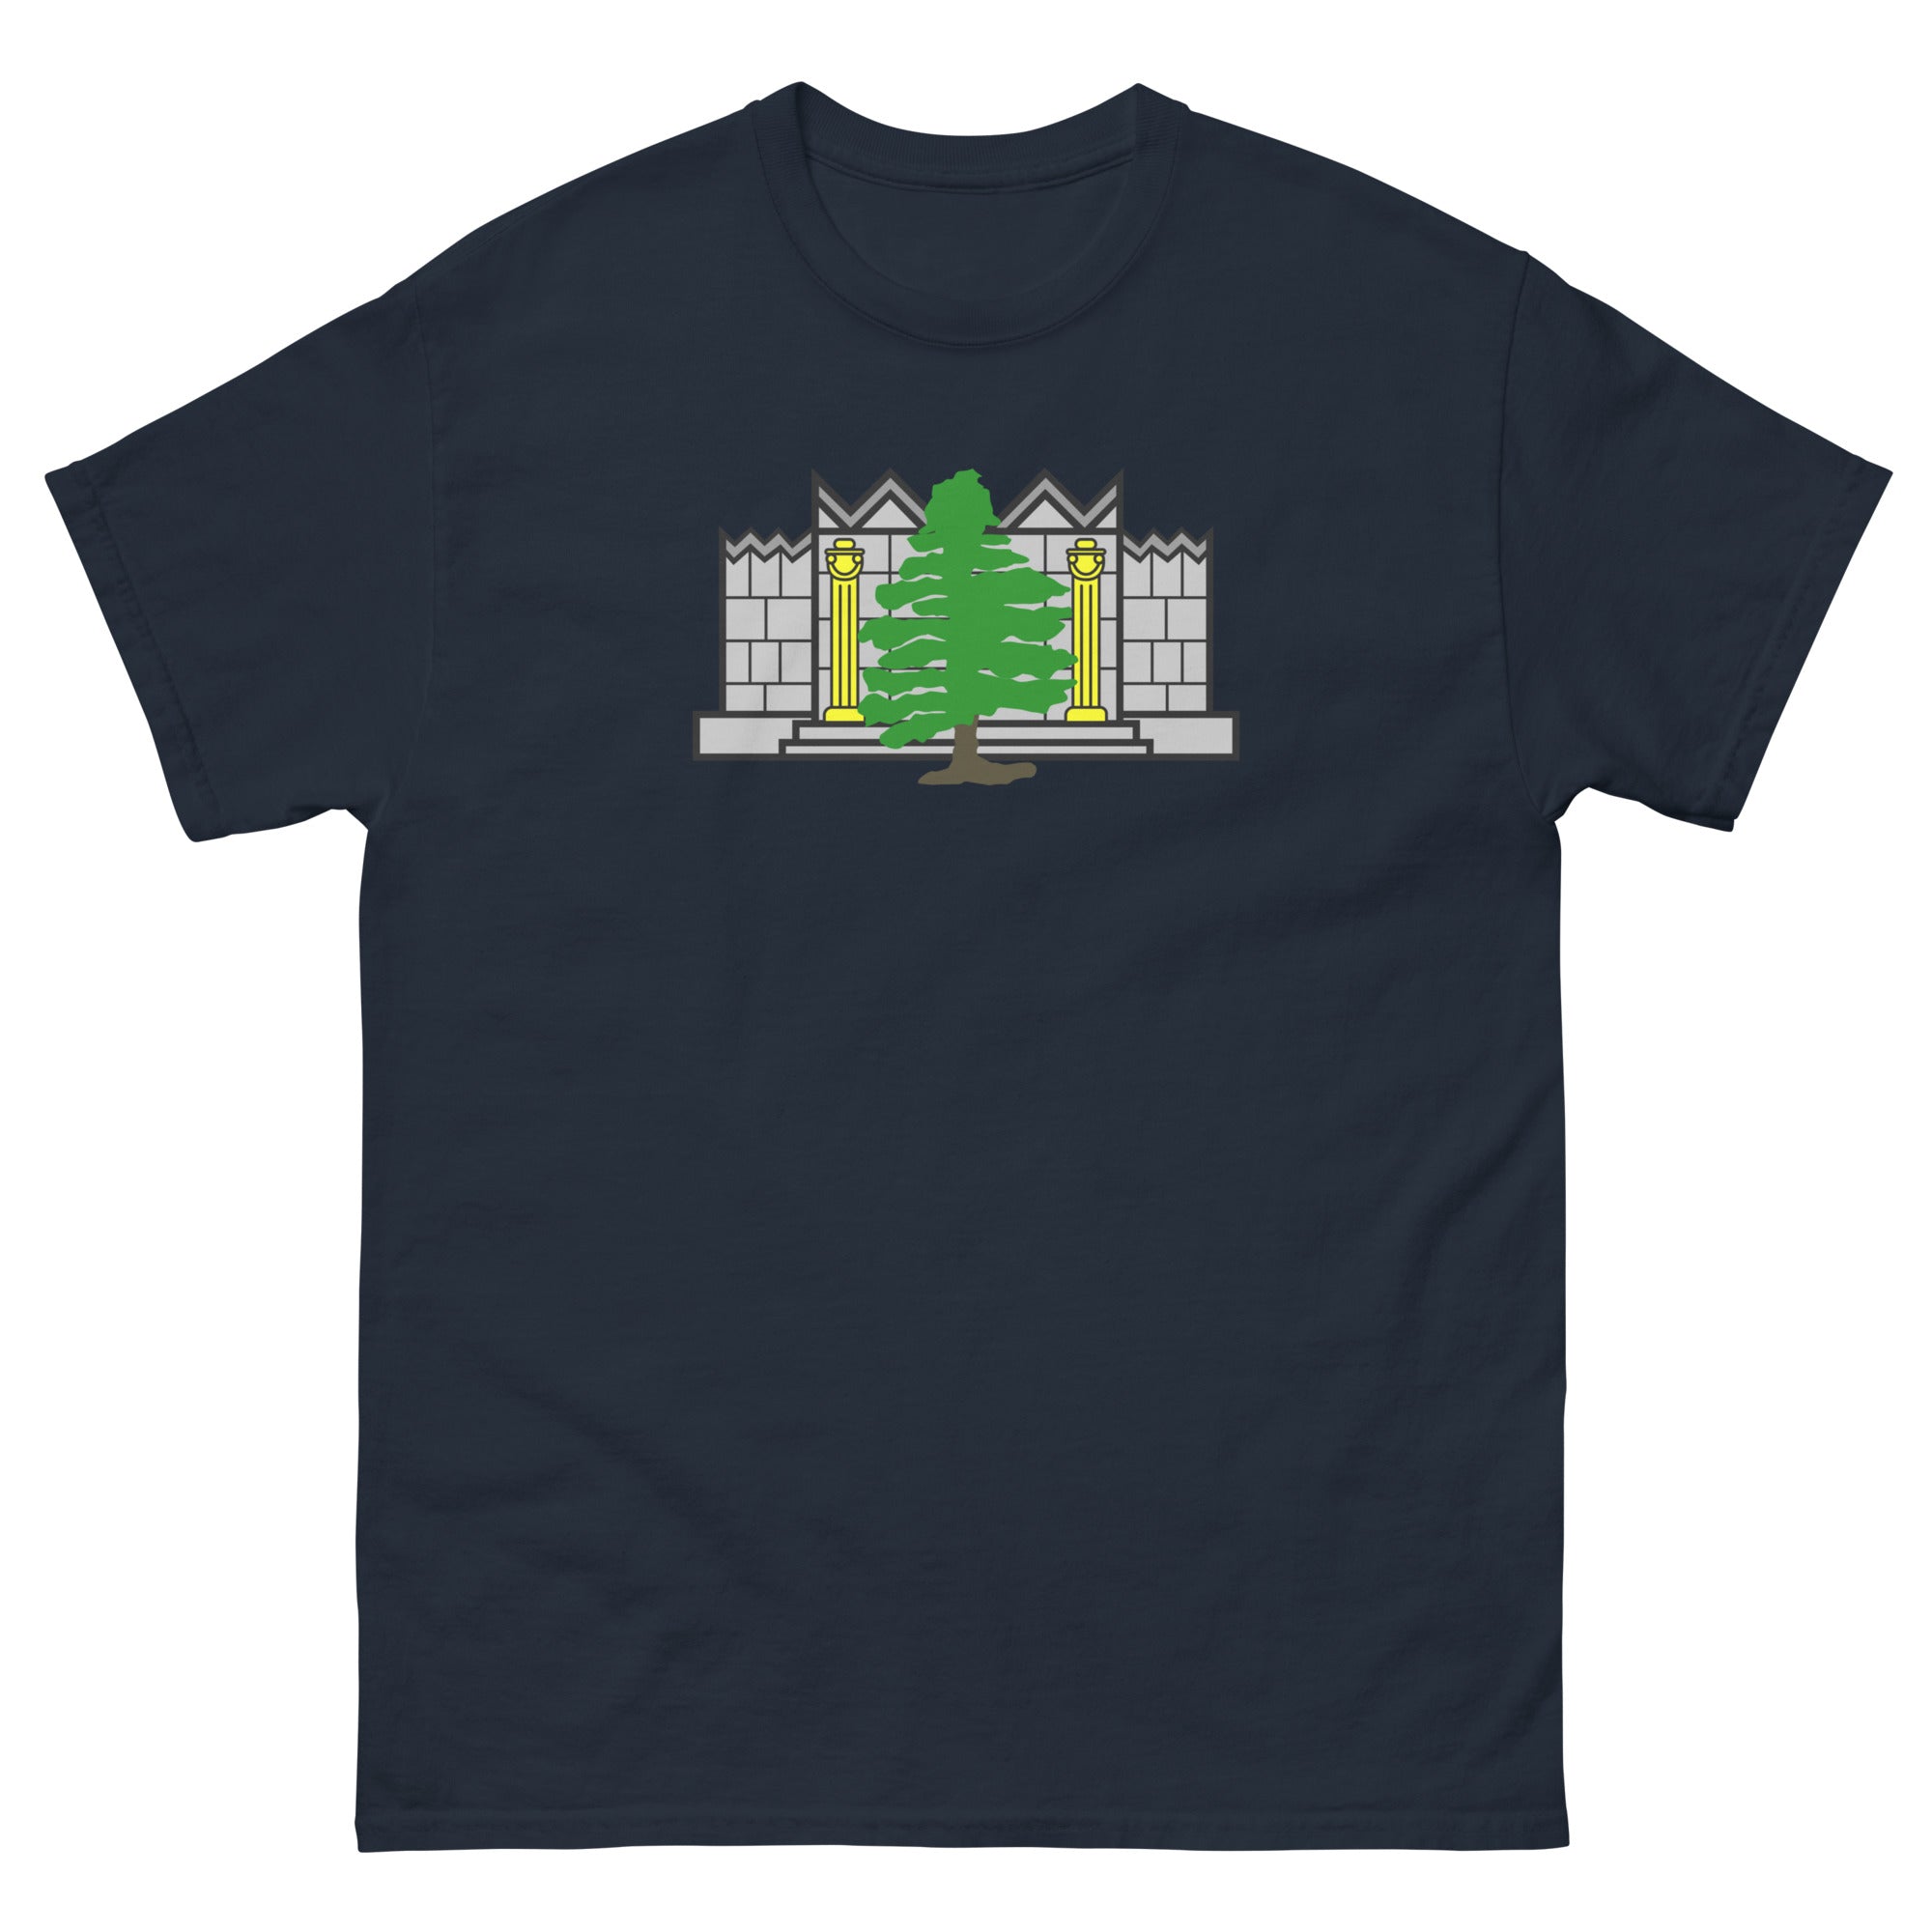 Tall Cedars of Lebanon T-shirt